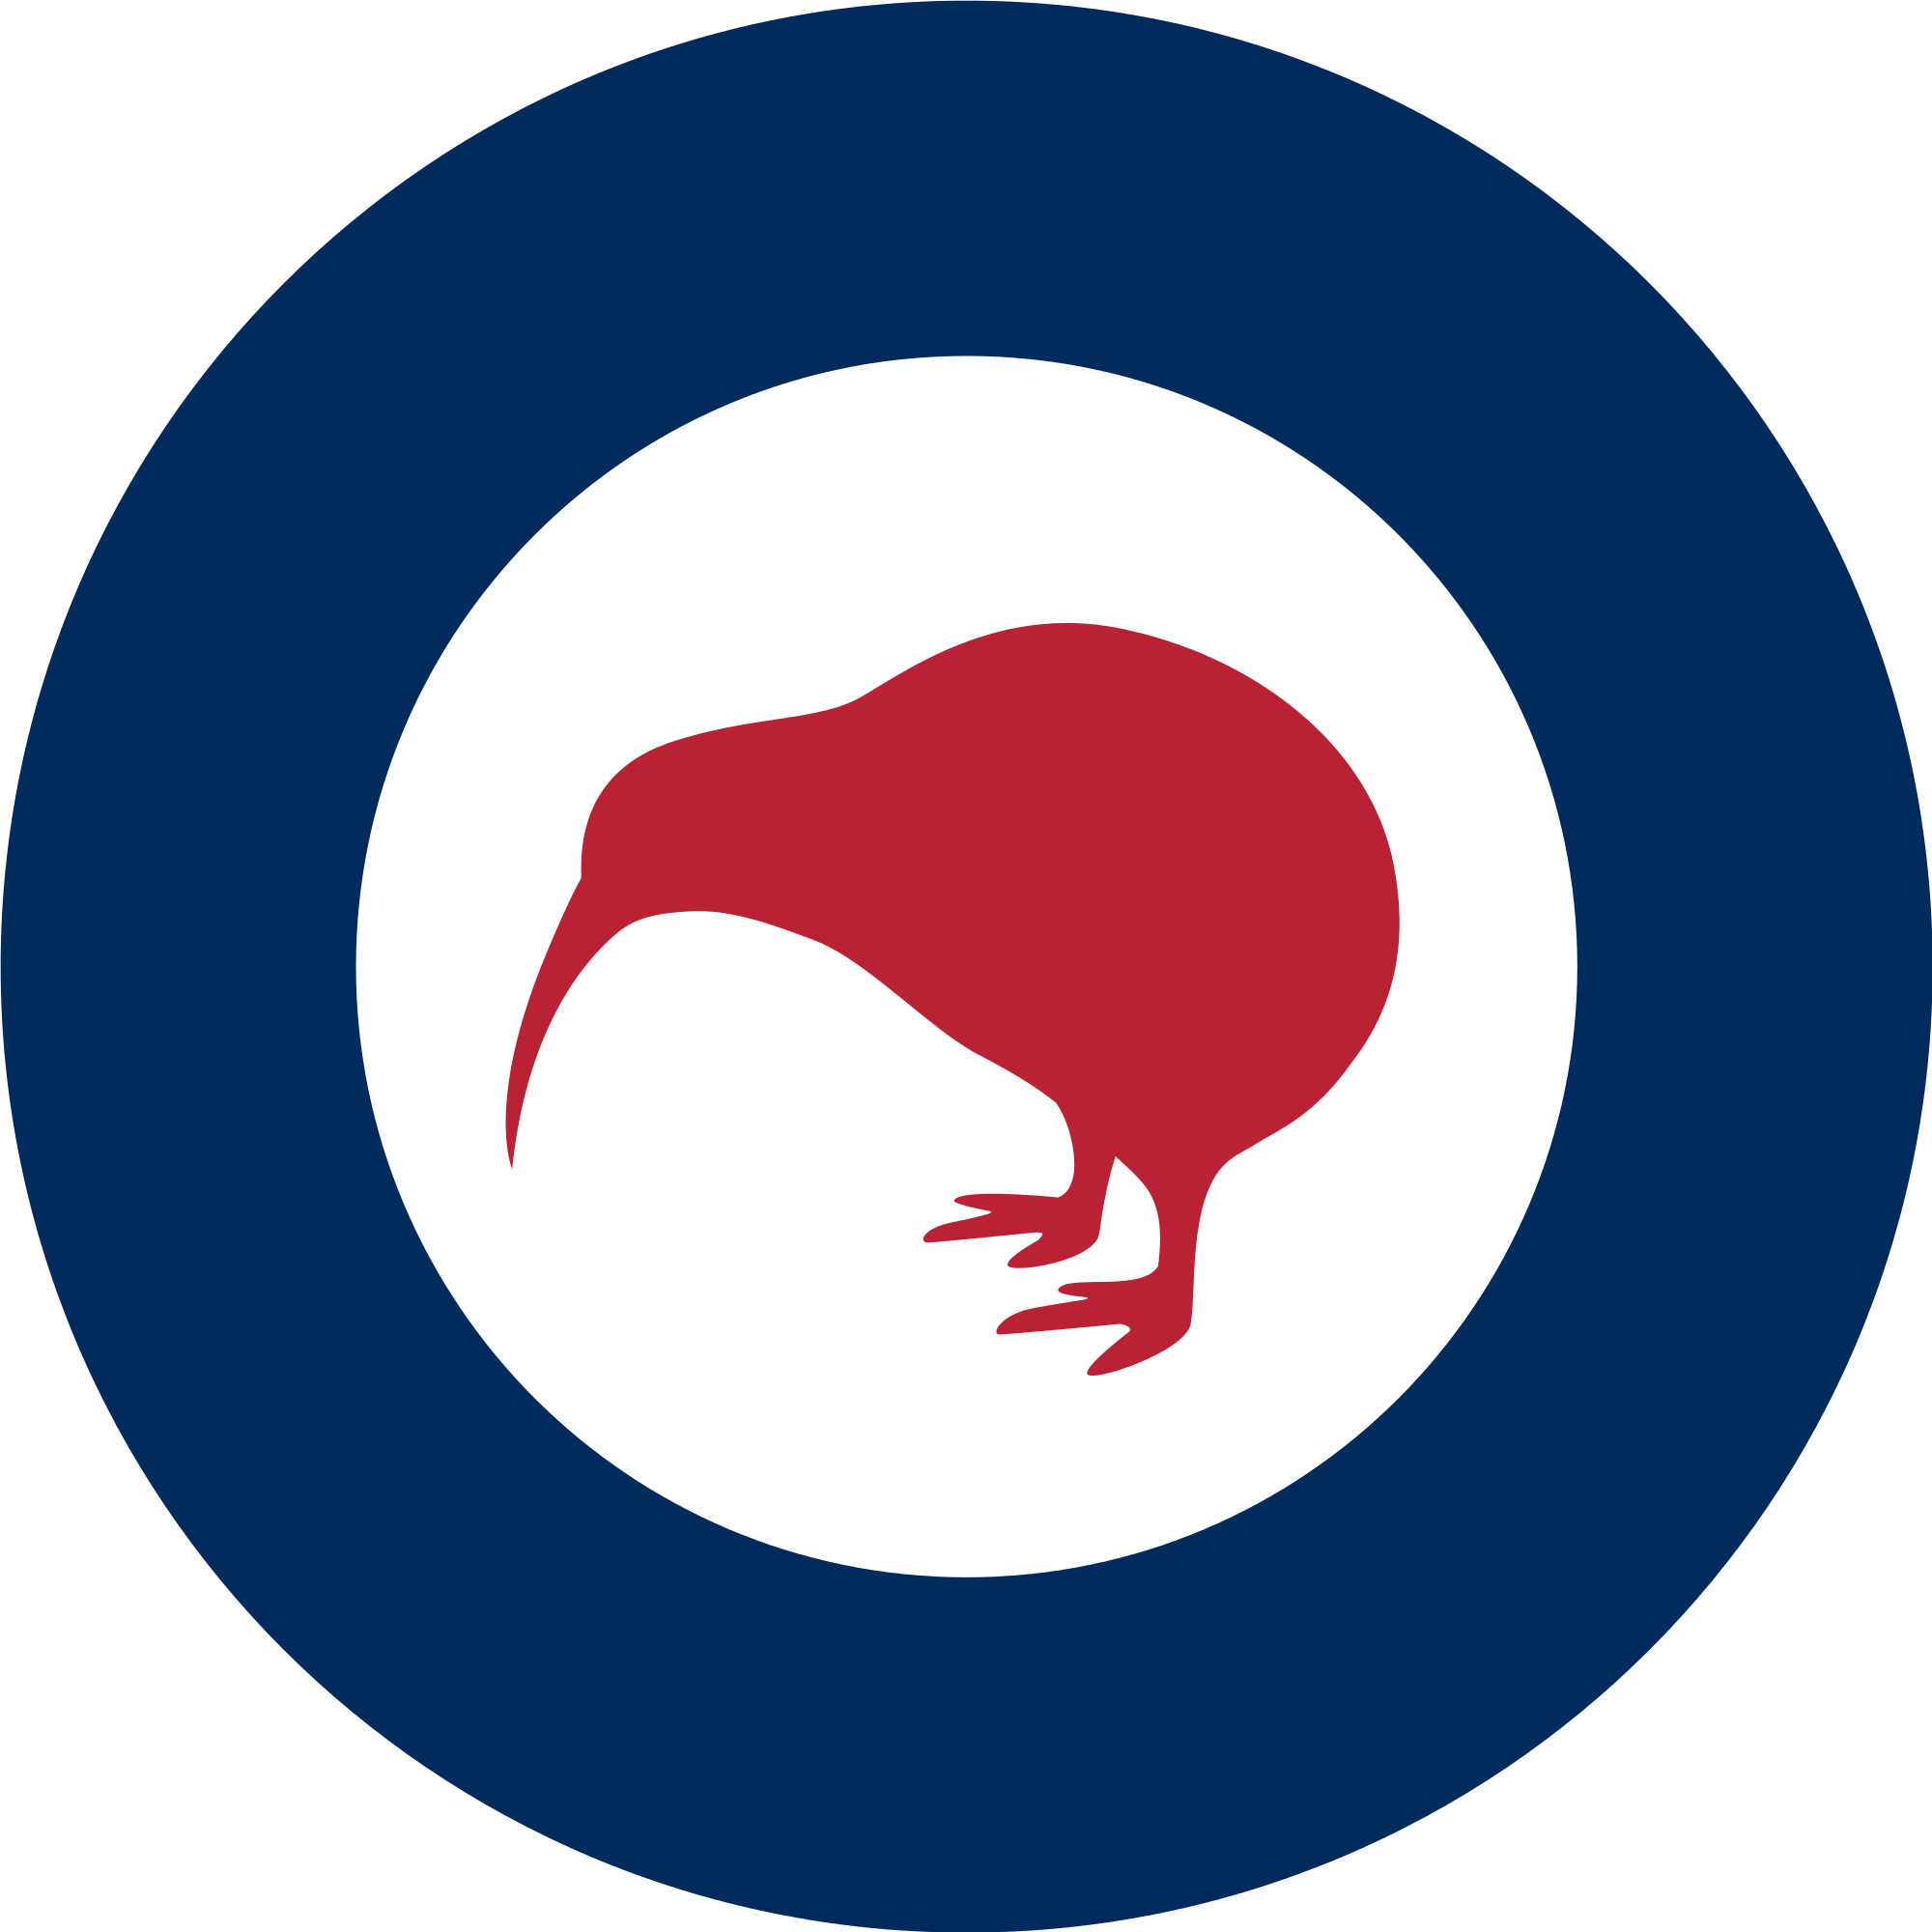 Red and Blue Circle Logo - red kiwi bird image in blue circle - Morgan Jones & Company Accountants